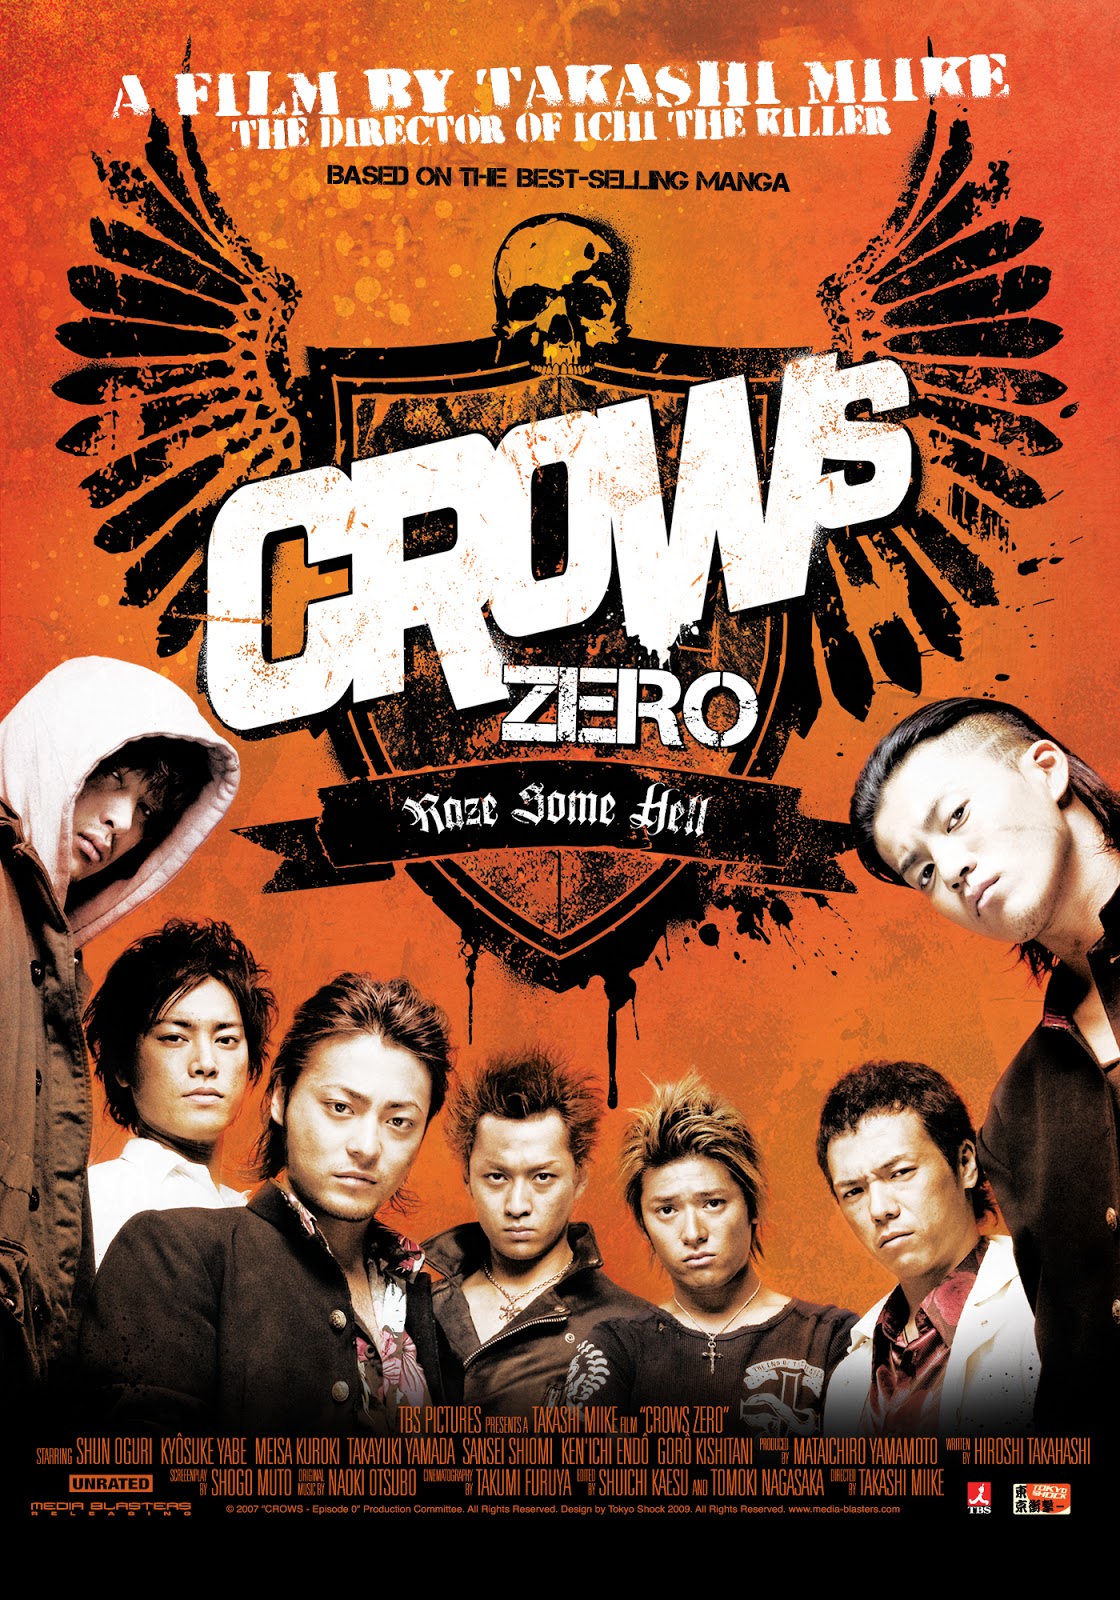 crows zero 1 final battle